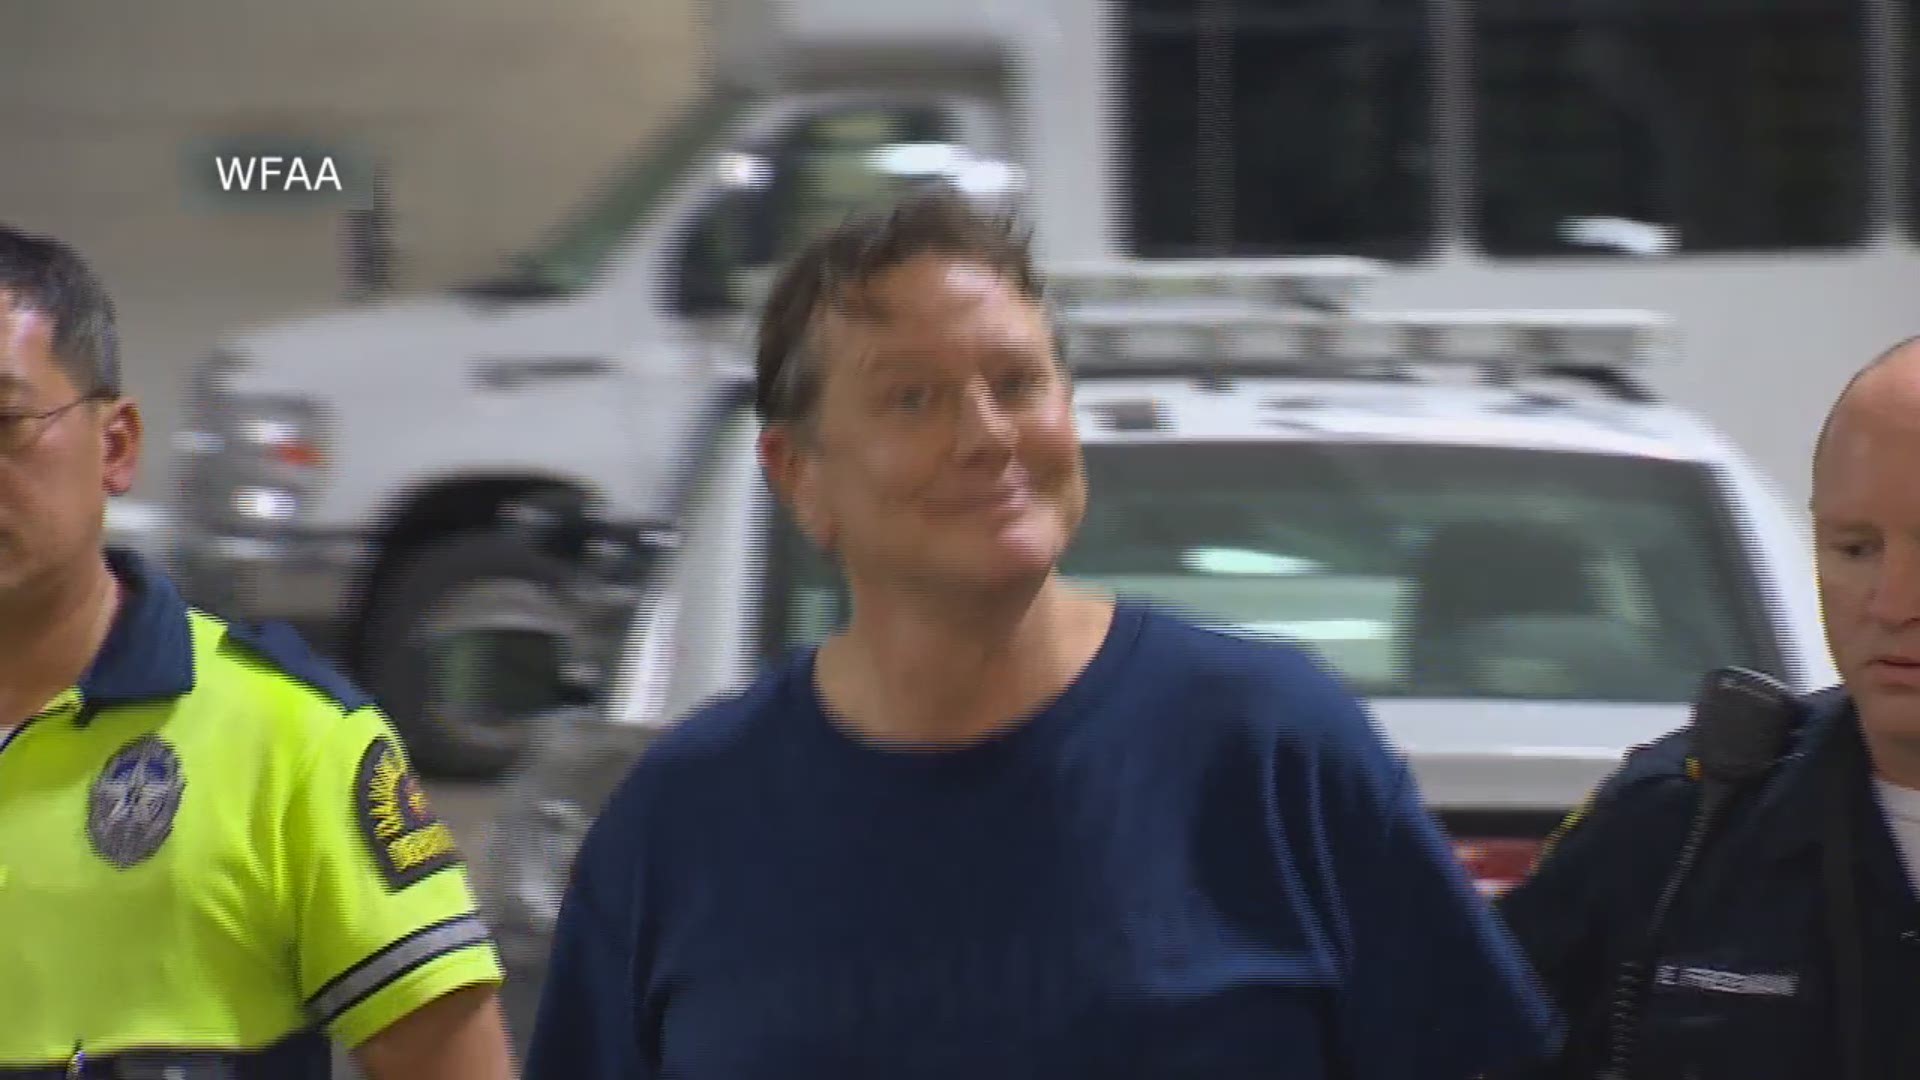 RAW VIDEO: Judge Reinhold arrested at Dallas Love Field